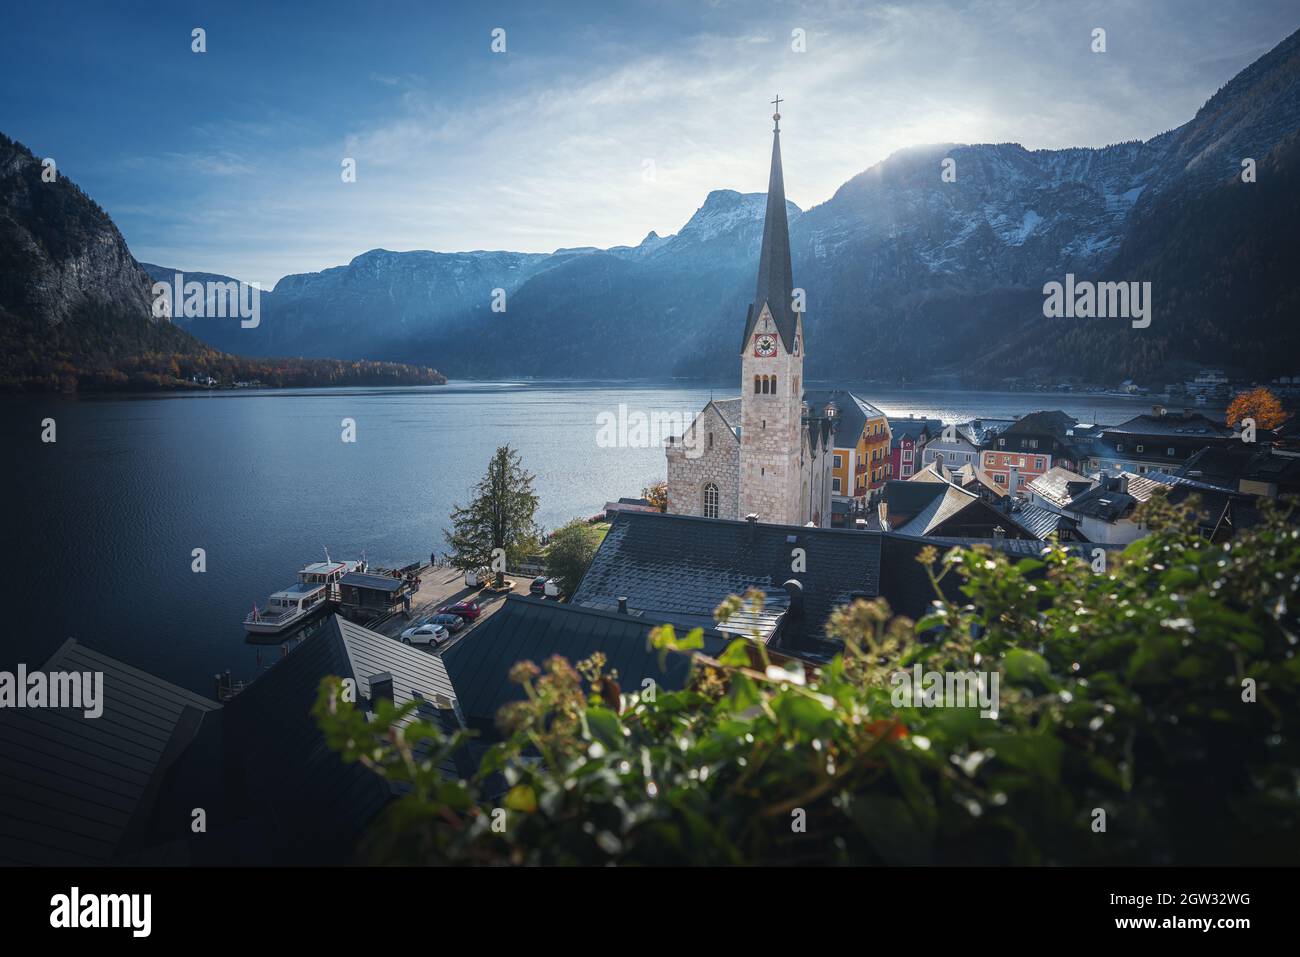 Hallstatt beautiful view with Lake, Church and Alps Mountains - Hallstatt, Austria Stock Photo